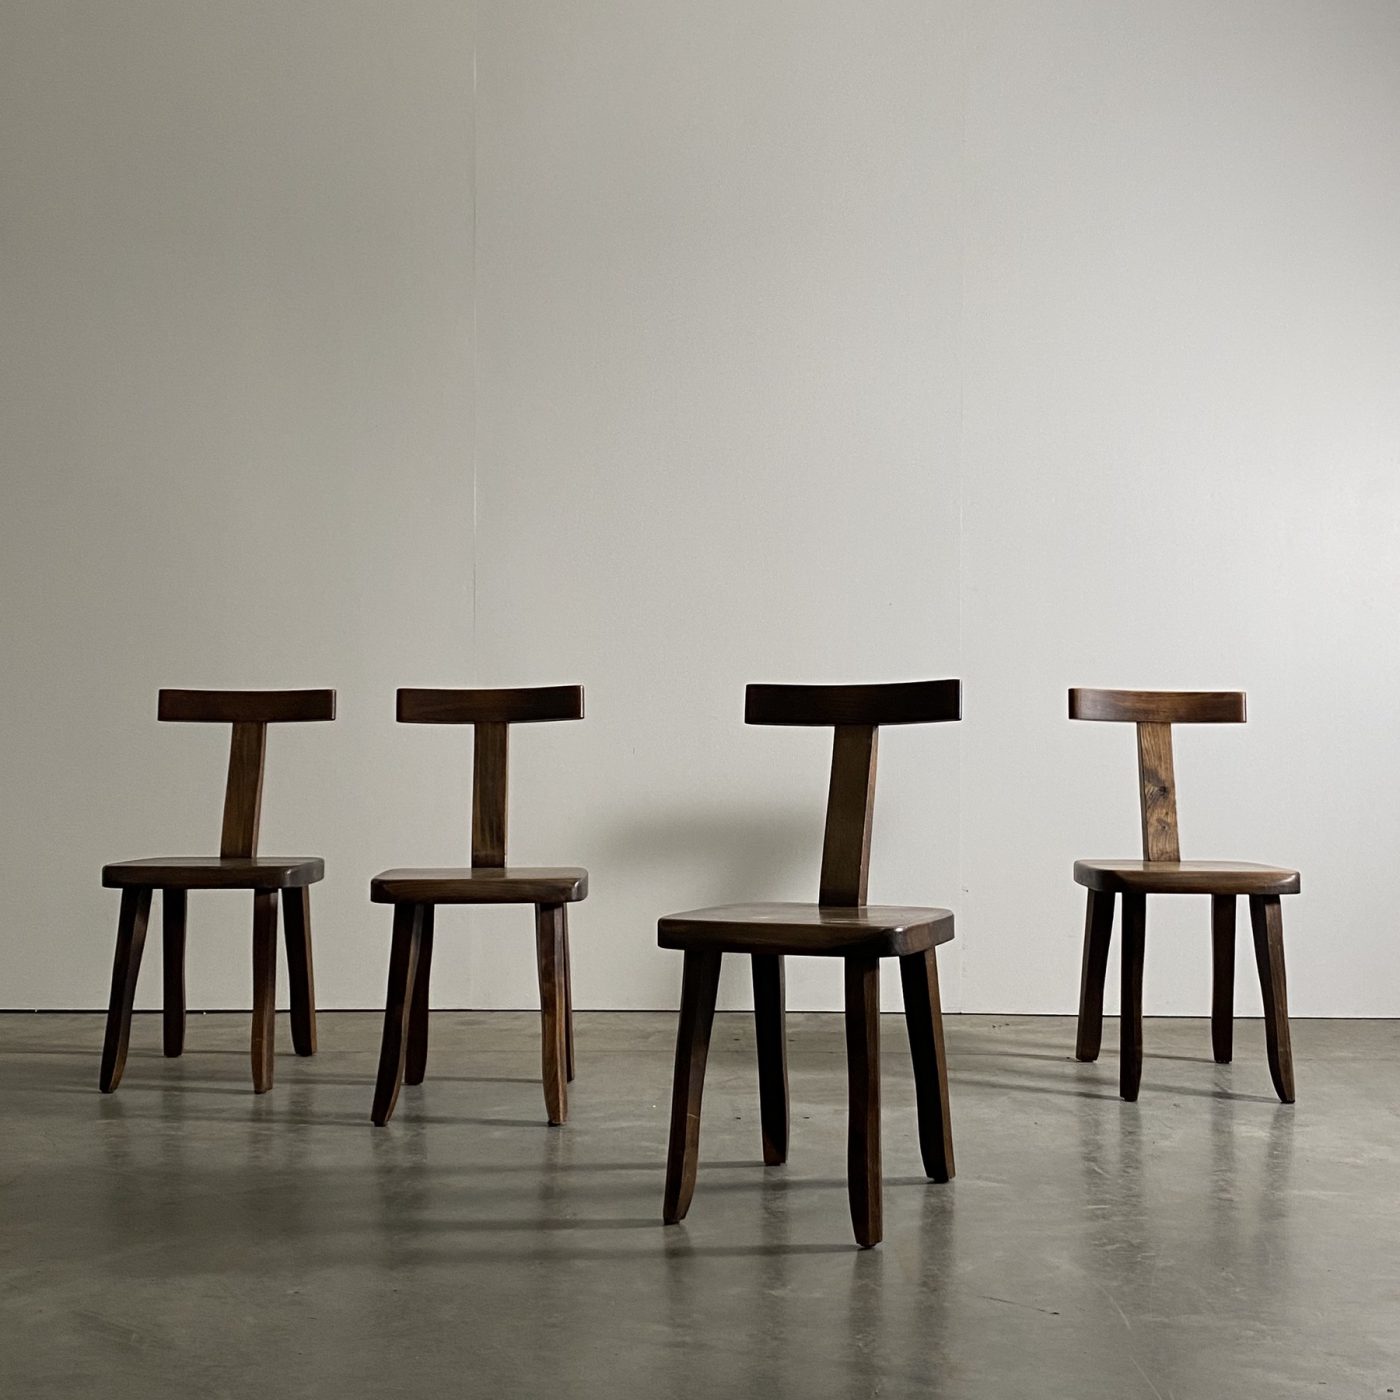 objet-vagabond-hanninen-chairs0008